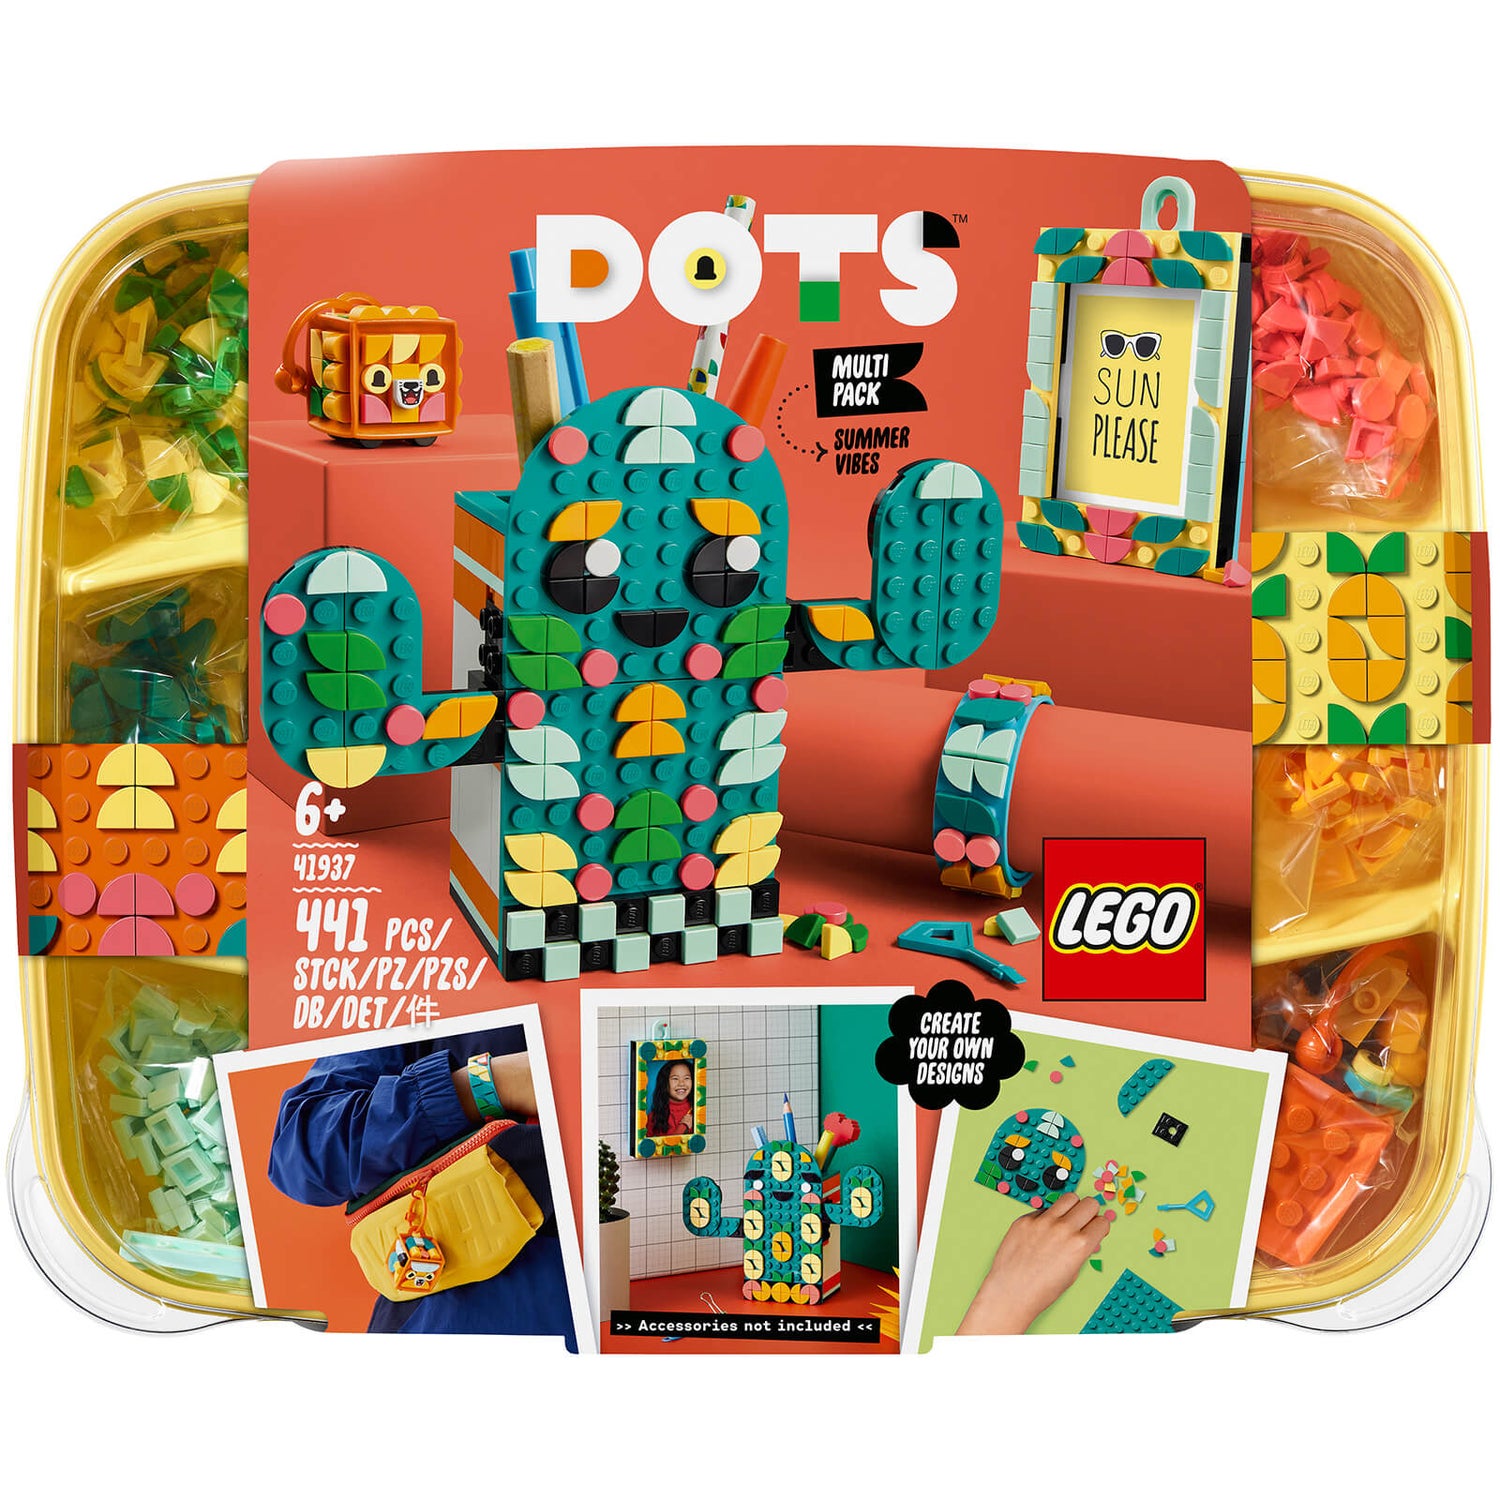 LEGO Dots Multi-pack ambiance estivale (41937)